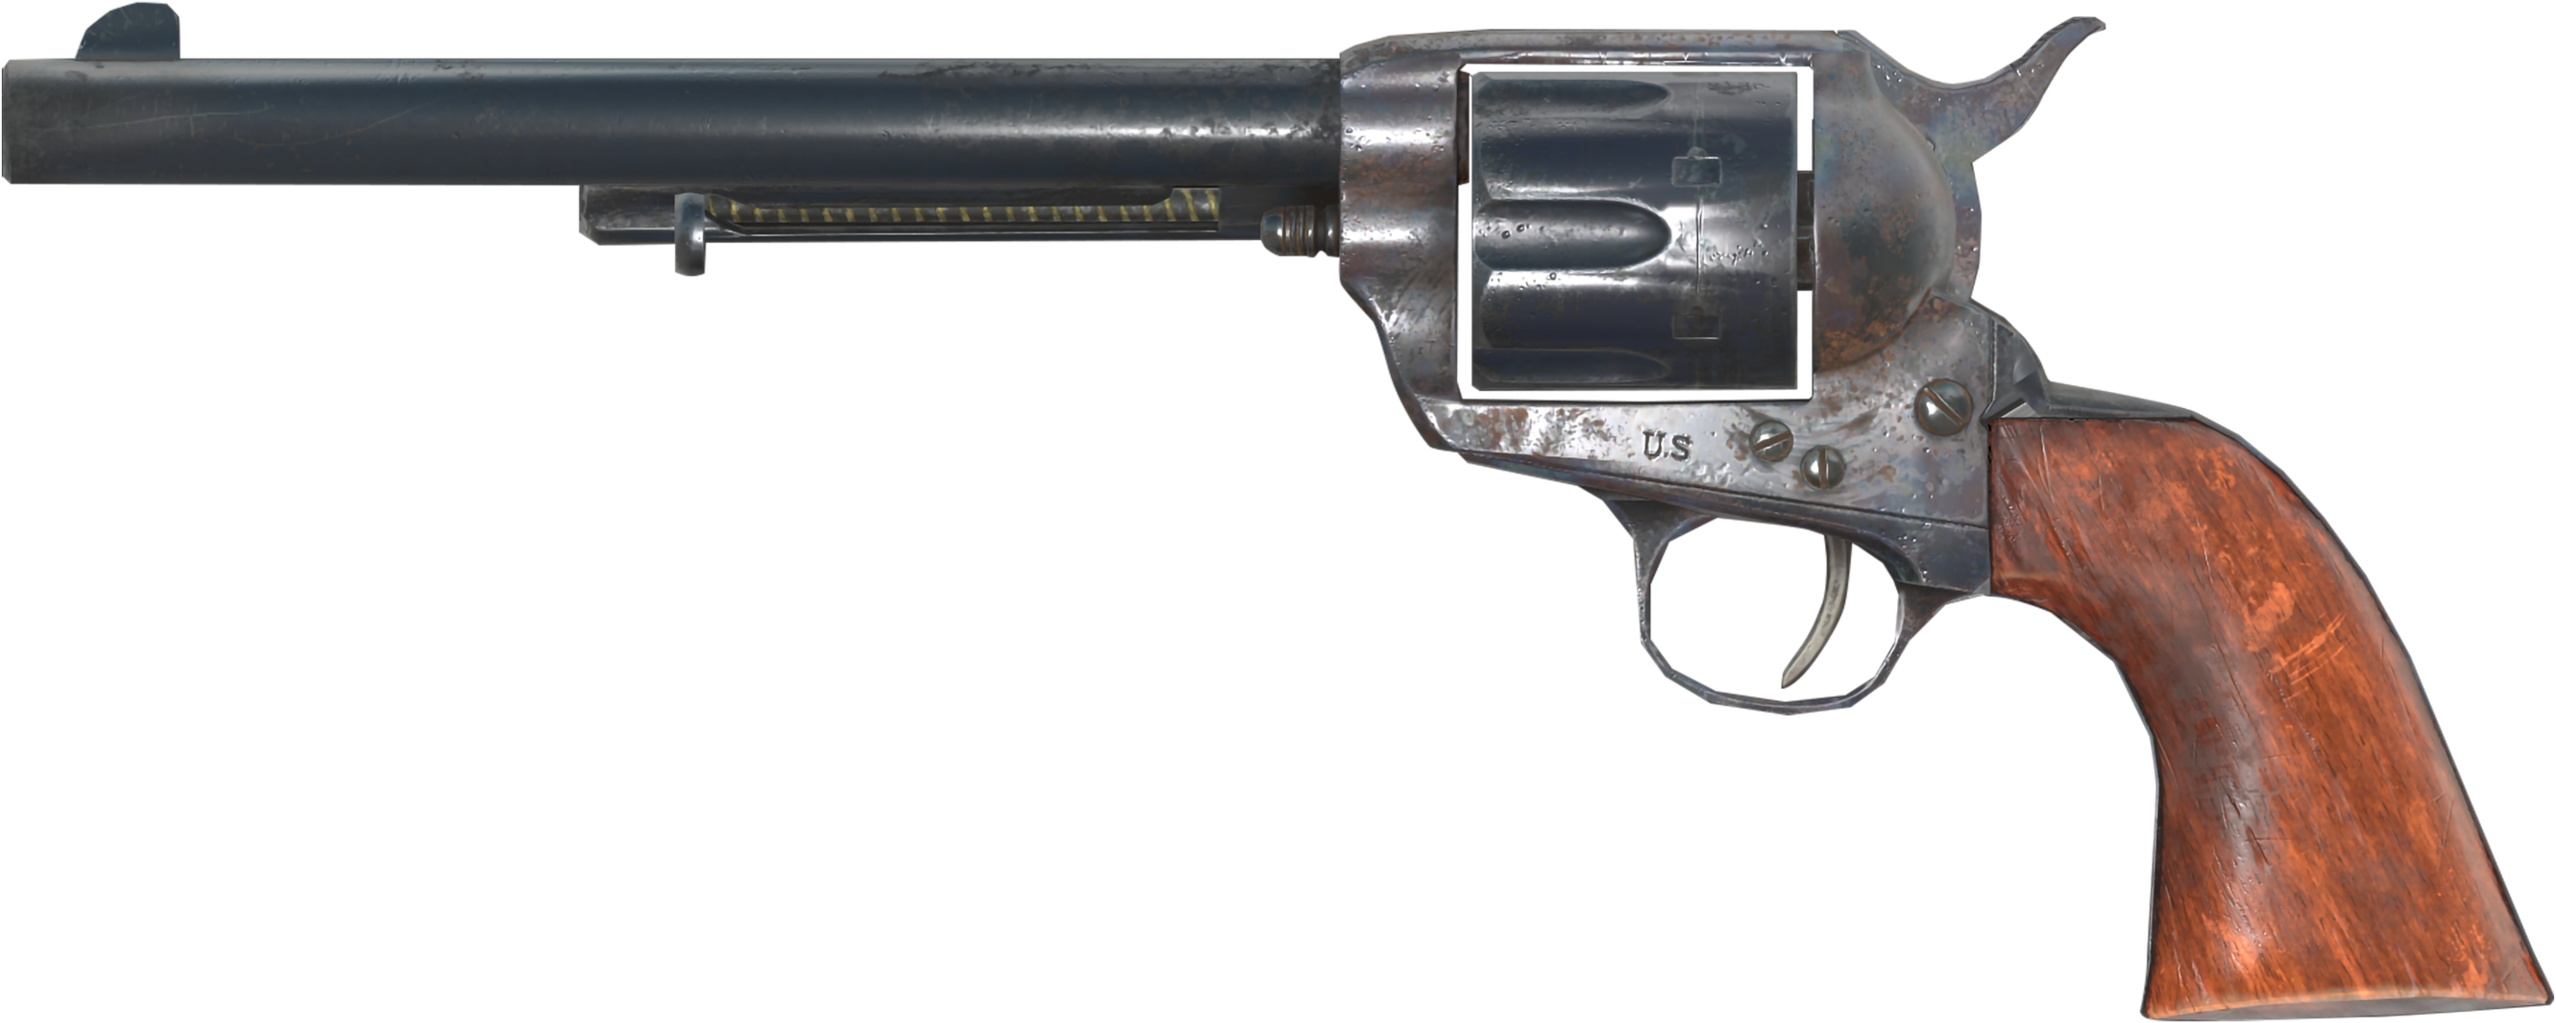 fallout new vegas revolvers